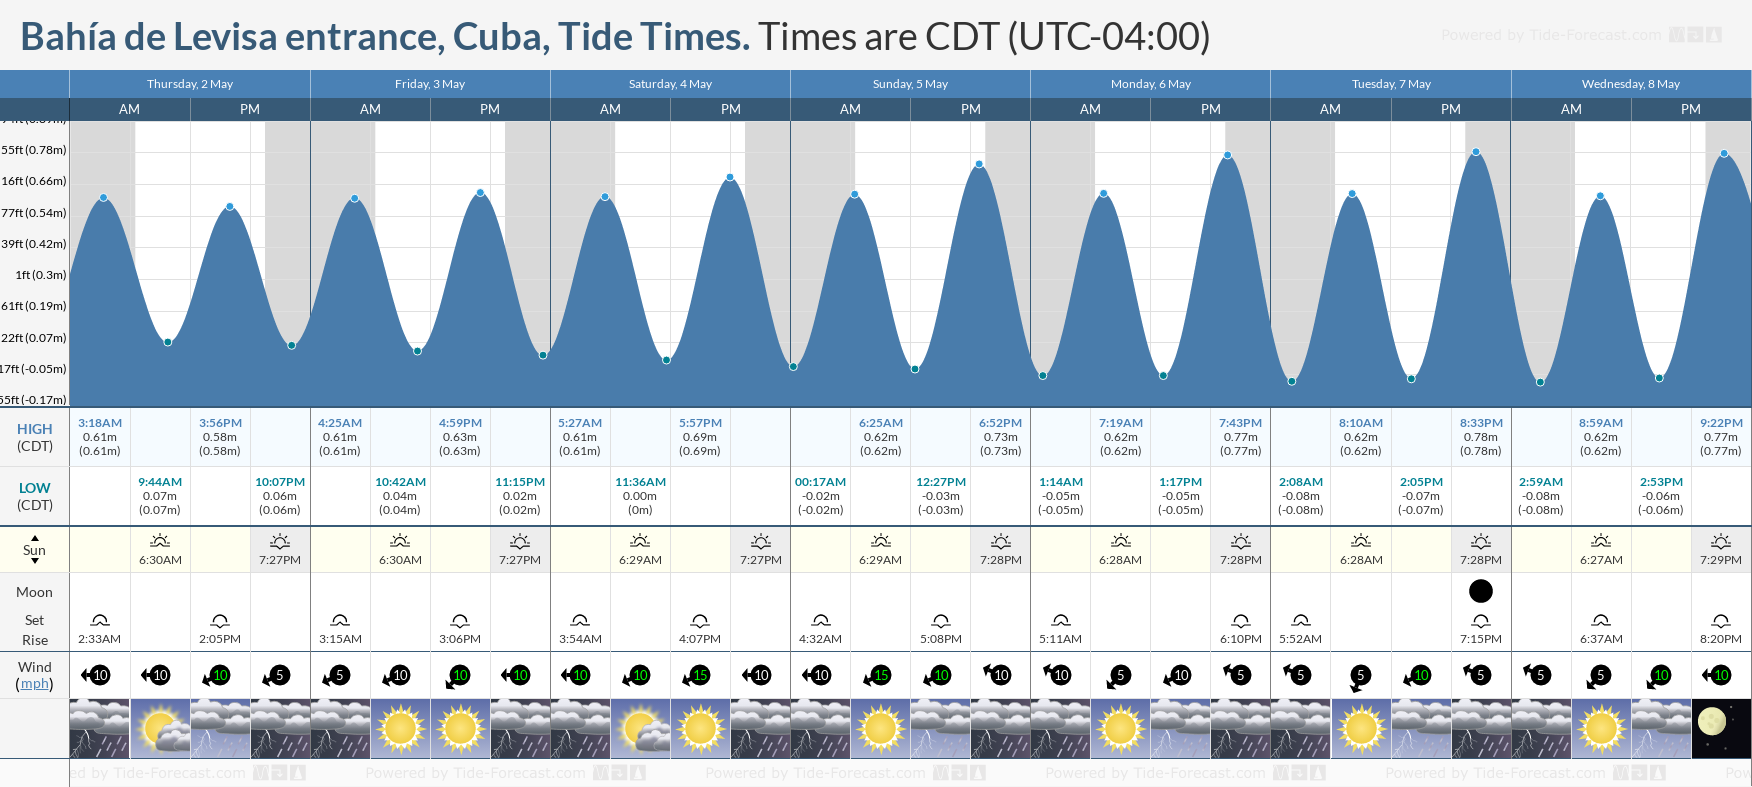 Bahía de Levisa entrance, Cuba Tide Chart including high and low tide times for the next 7 days